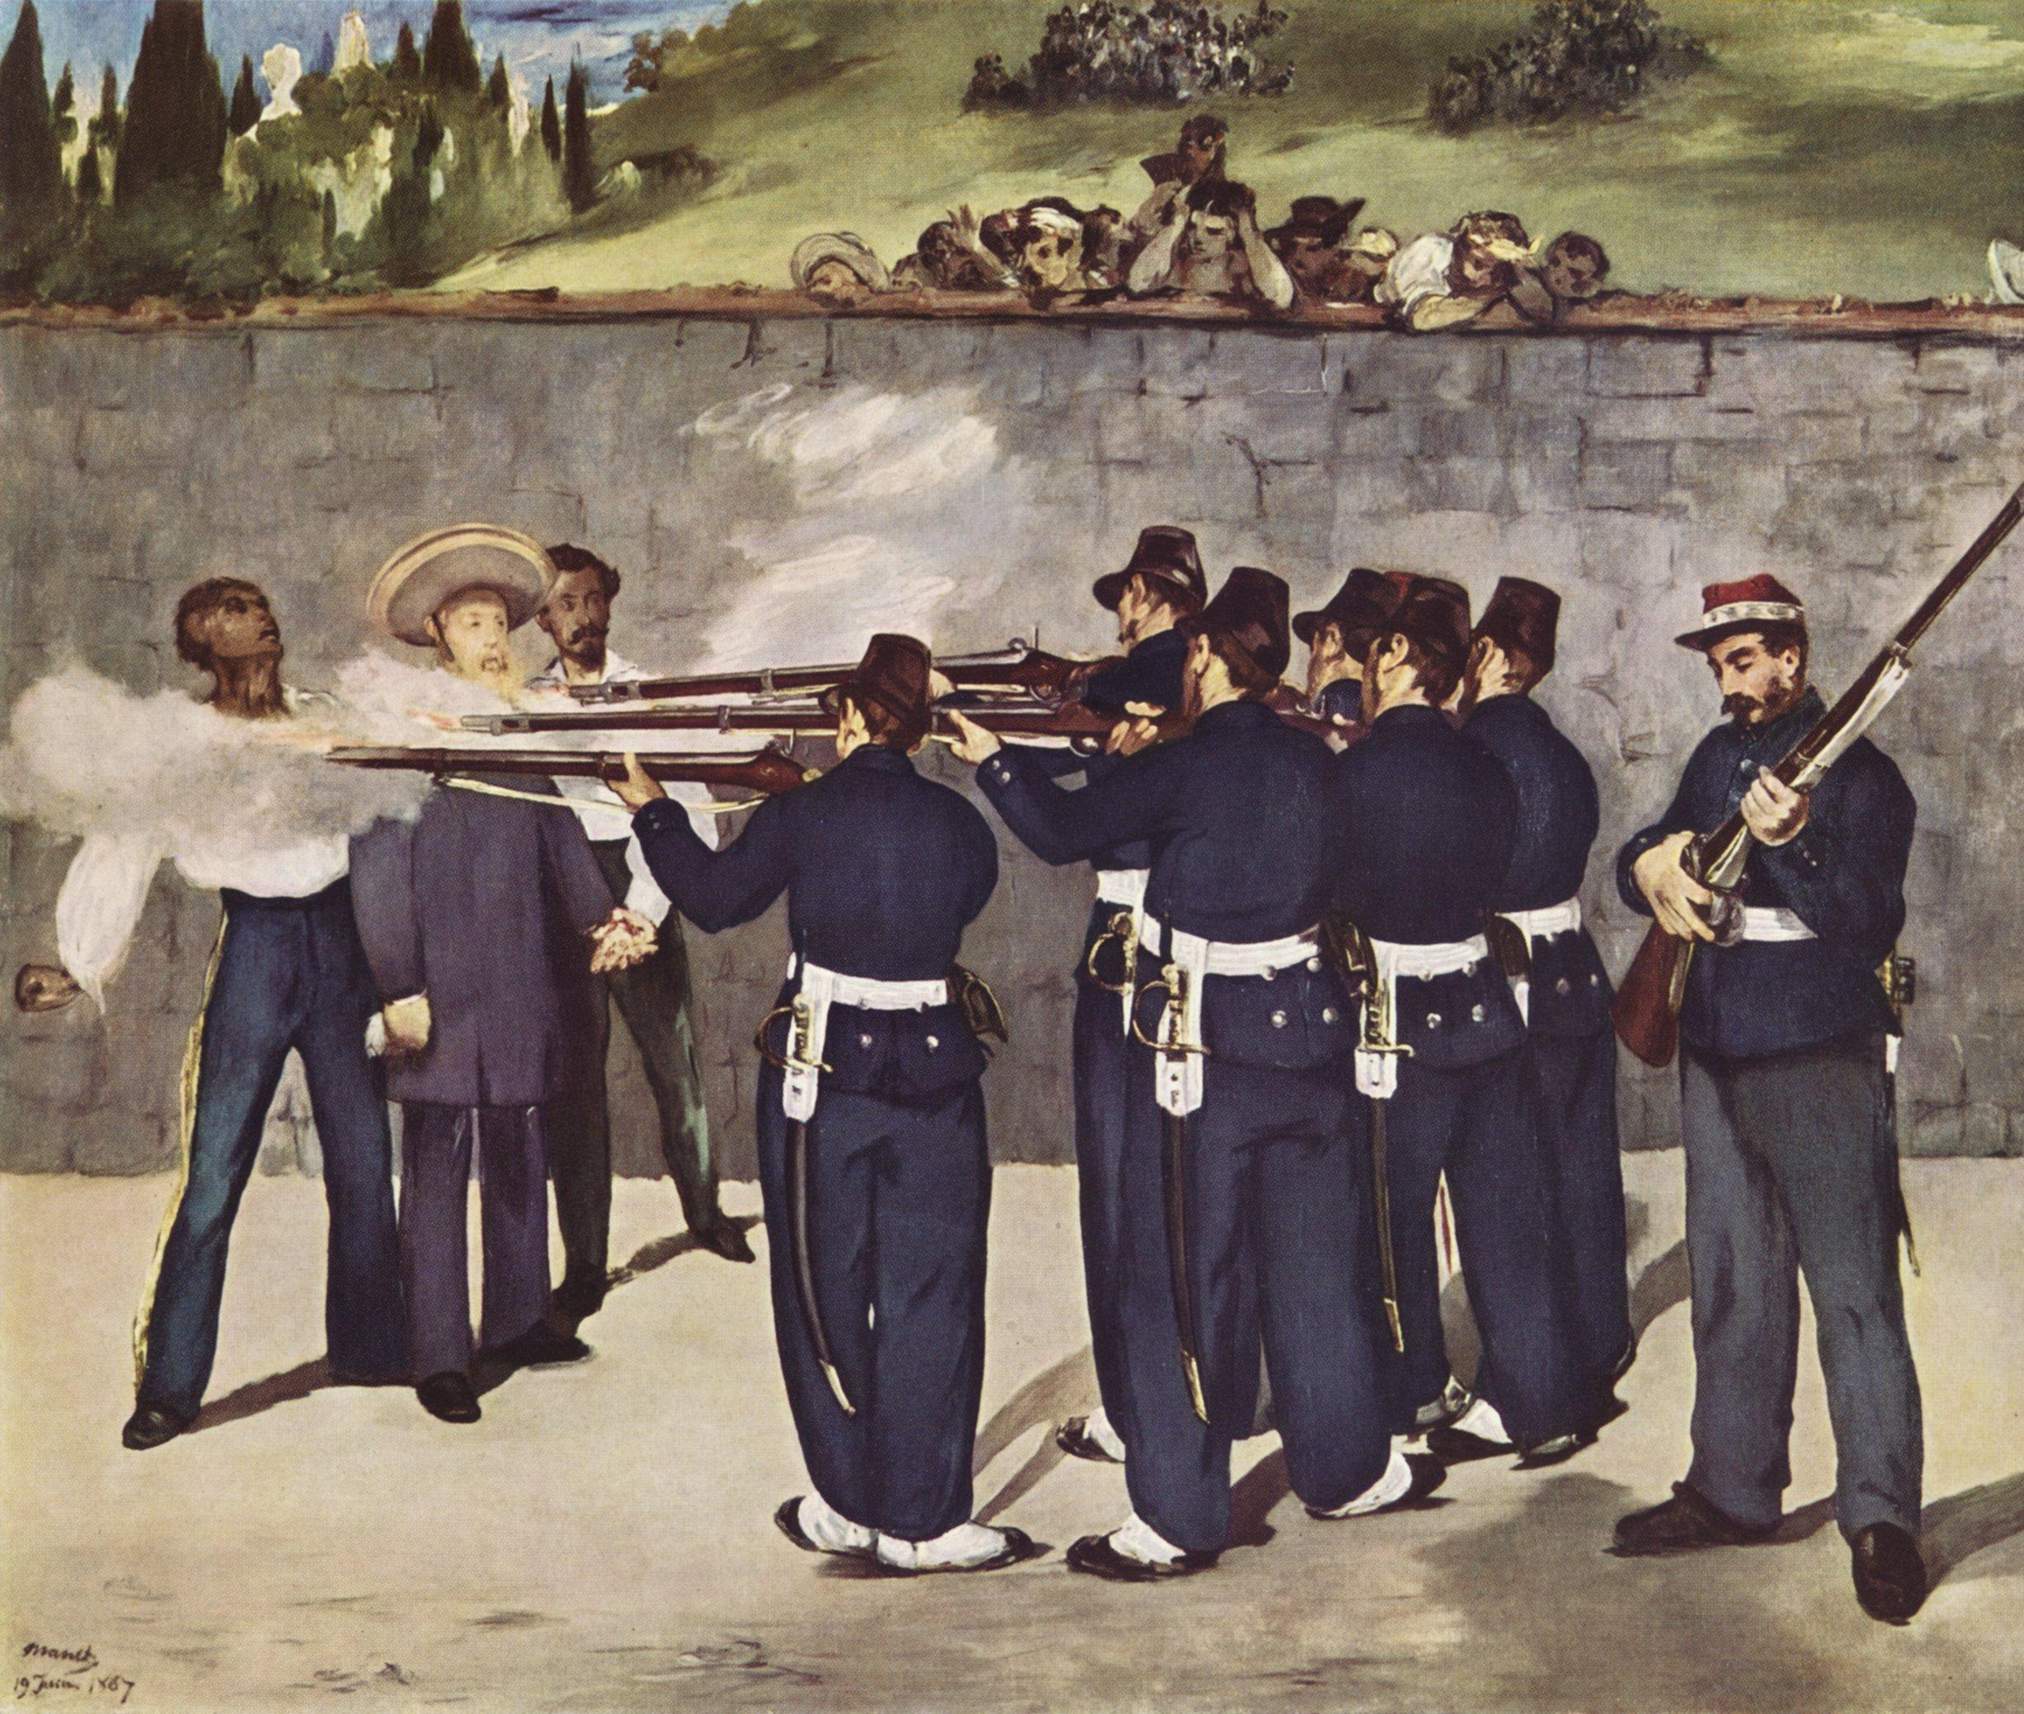 Édouard Manet's Execution of Emperor Maximilian (1868–1869)